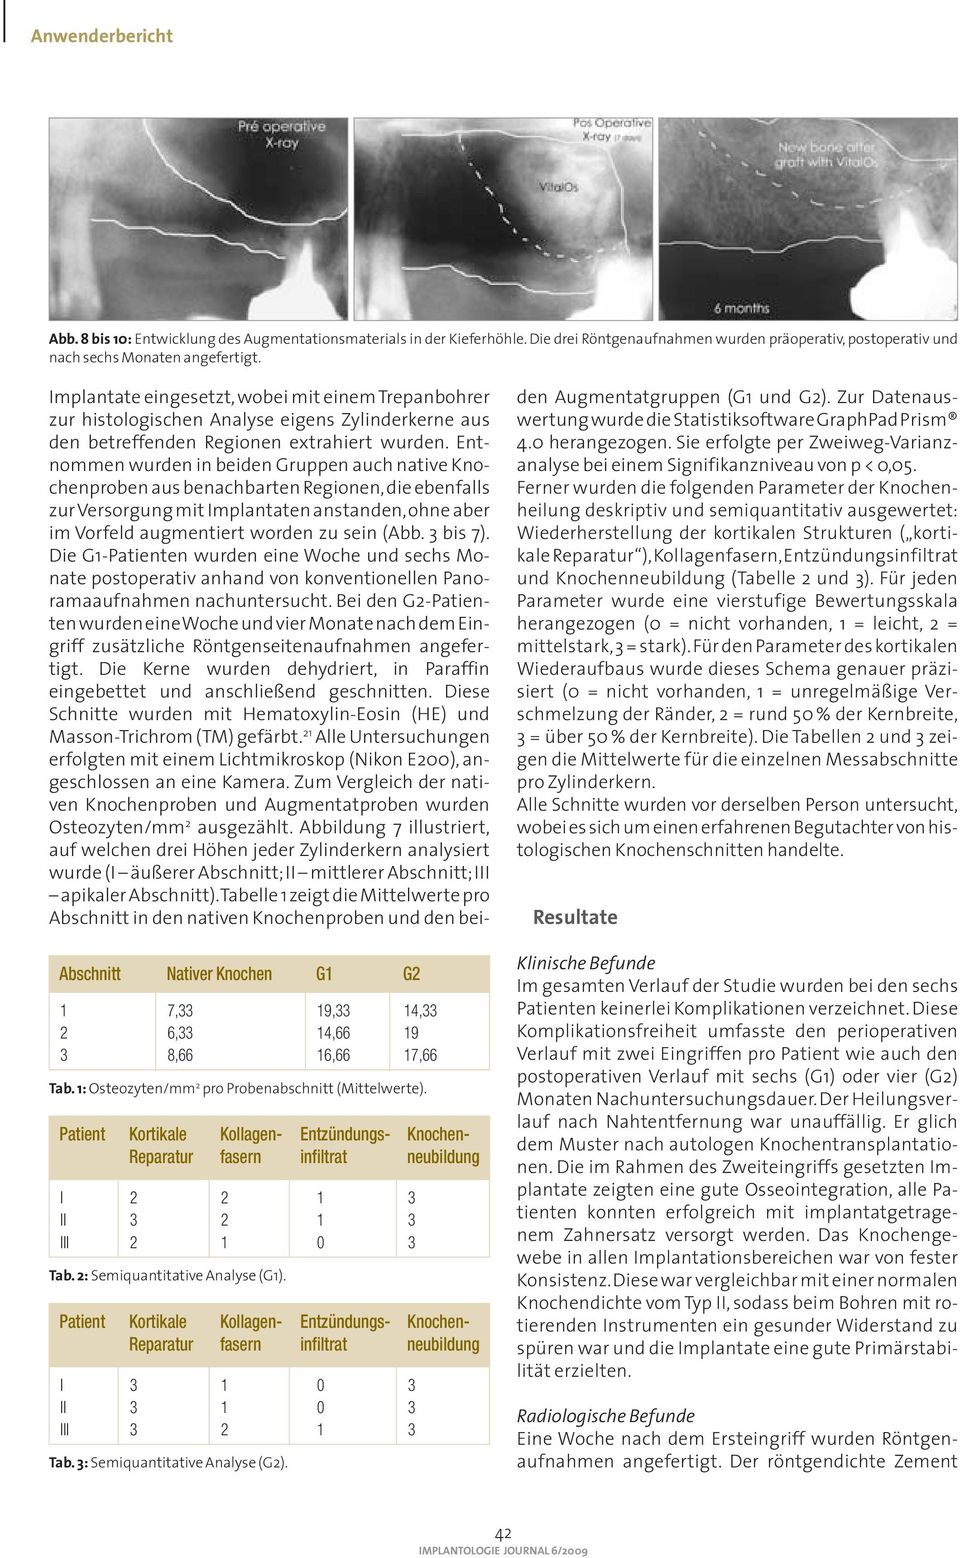 Patient Kortikale Kollagen- Entzündungs- Knochen- Reparatur fasern infiltrat neubildung I 2 2 1 3 II 3 2 1 3 III 2 1 0 3 Tab. 2: Semiquantitative Analyse (G1).